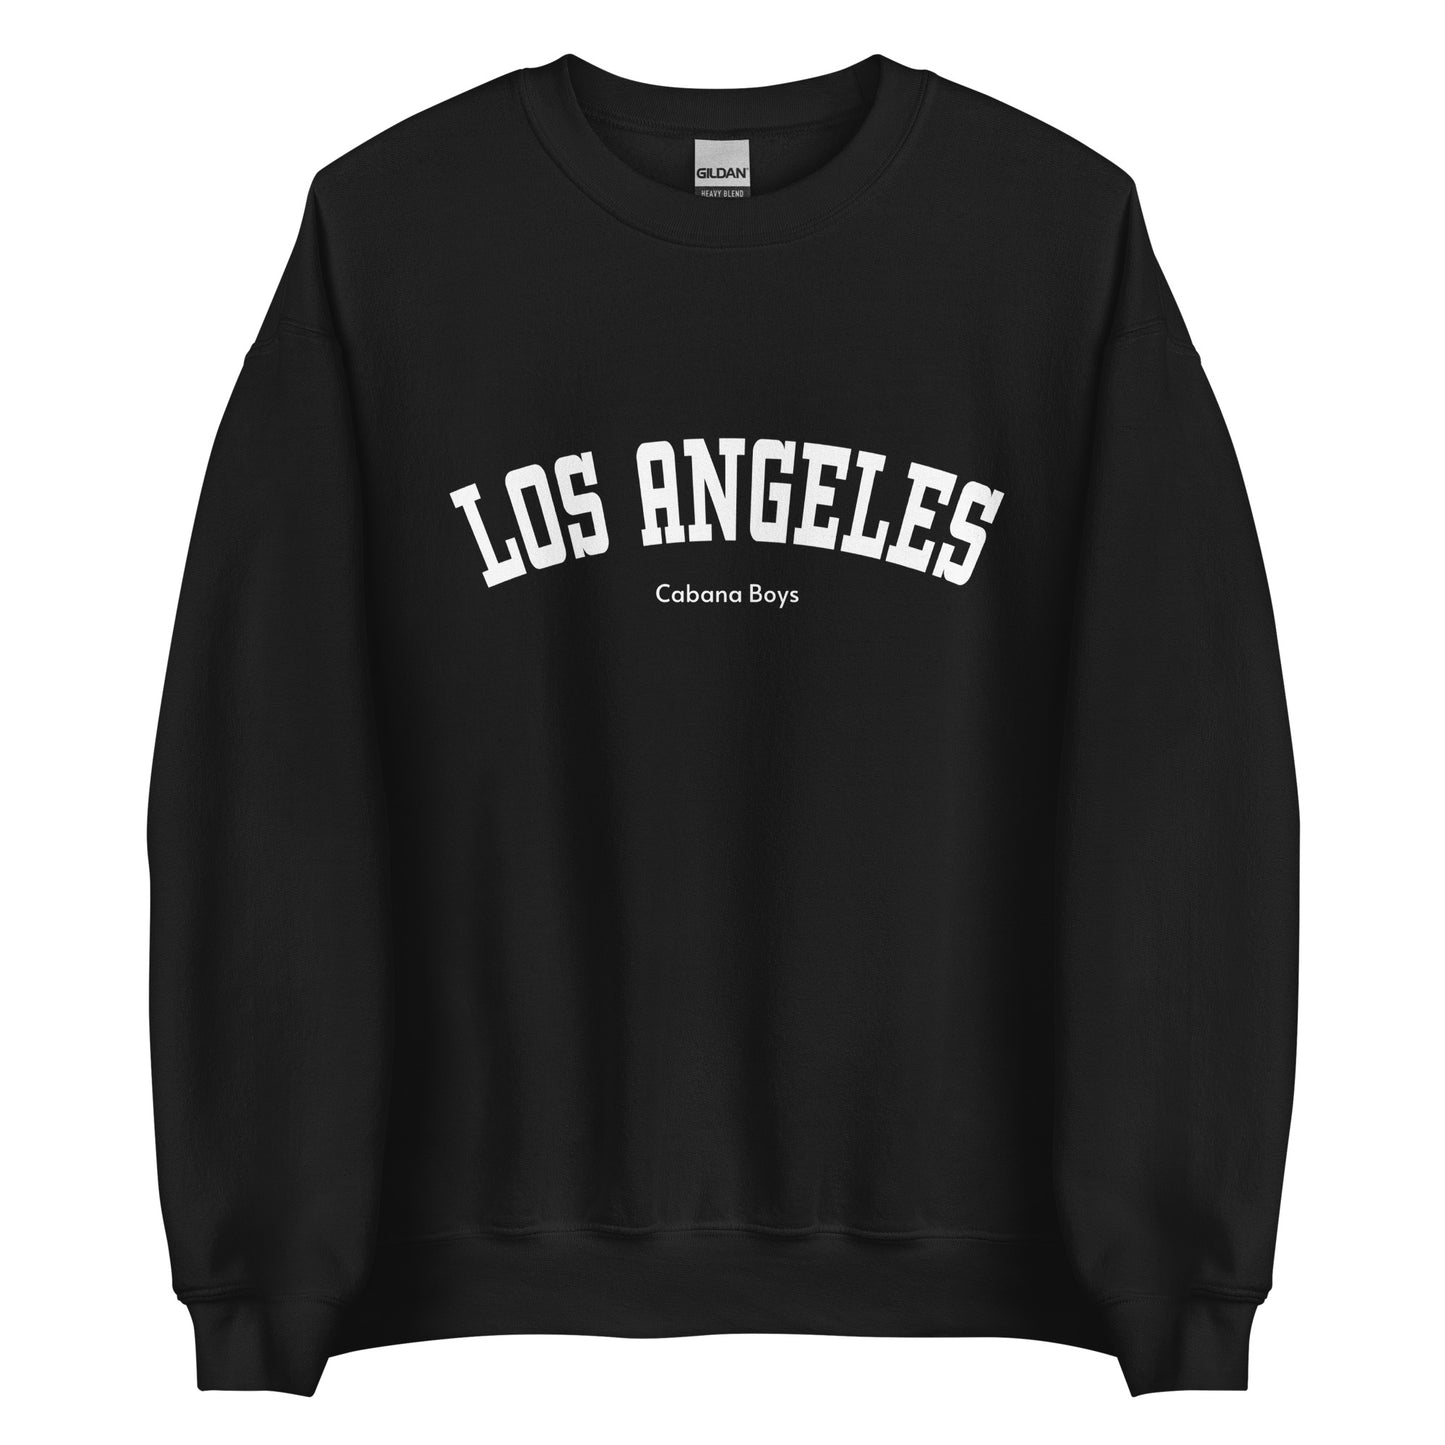 Los Angeles Cabana Boys Unisex Sweatshirt